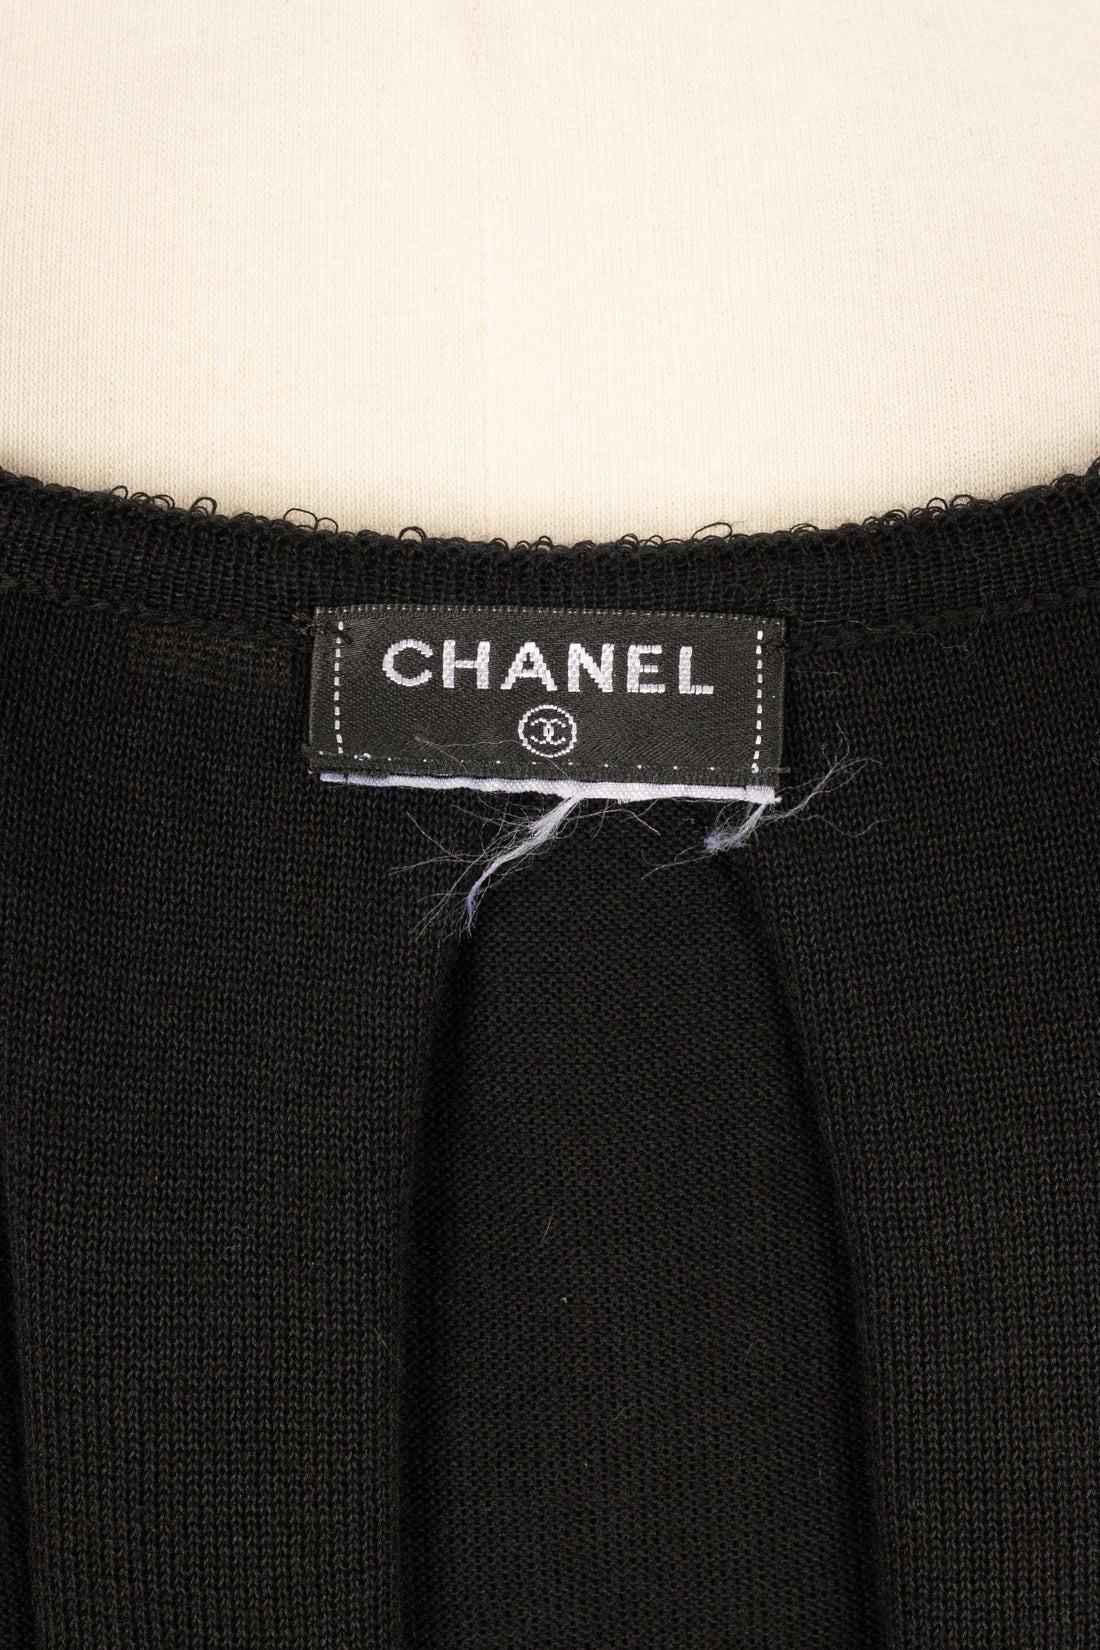 Chanel Black Mesh Sleeveless Top For Sale 2